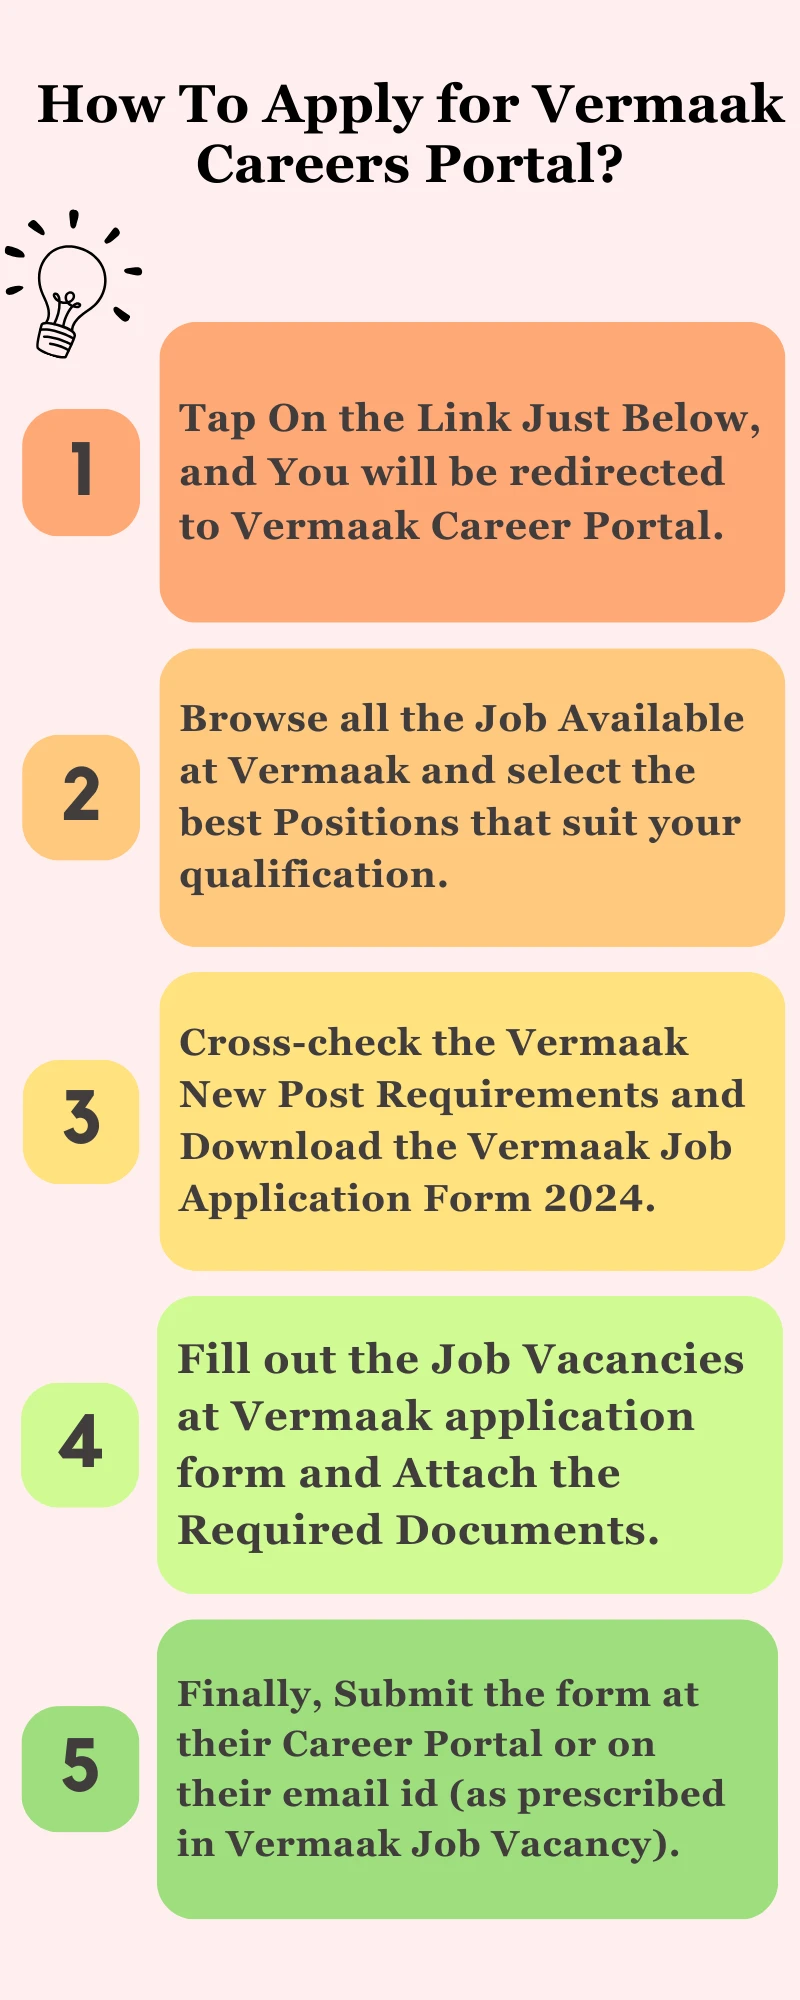 How To Apply for Vermaak Careers Portal?